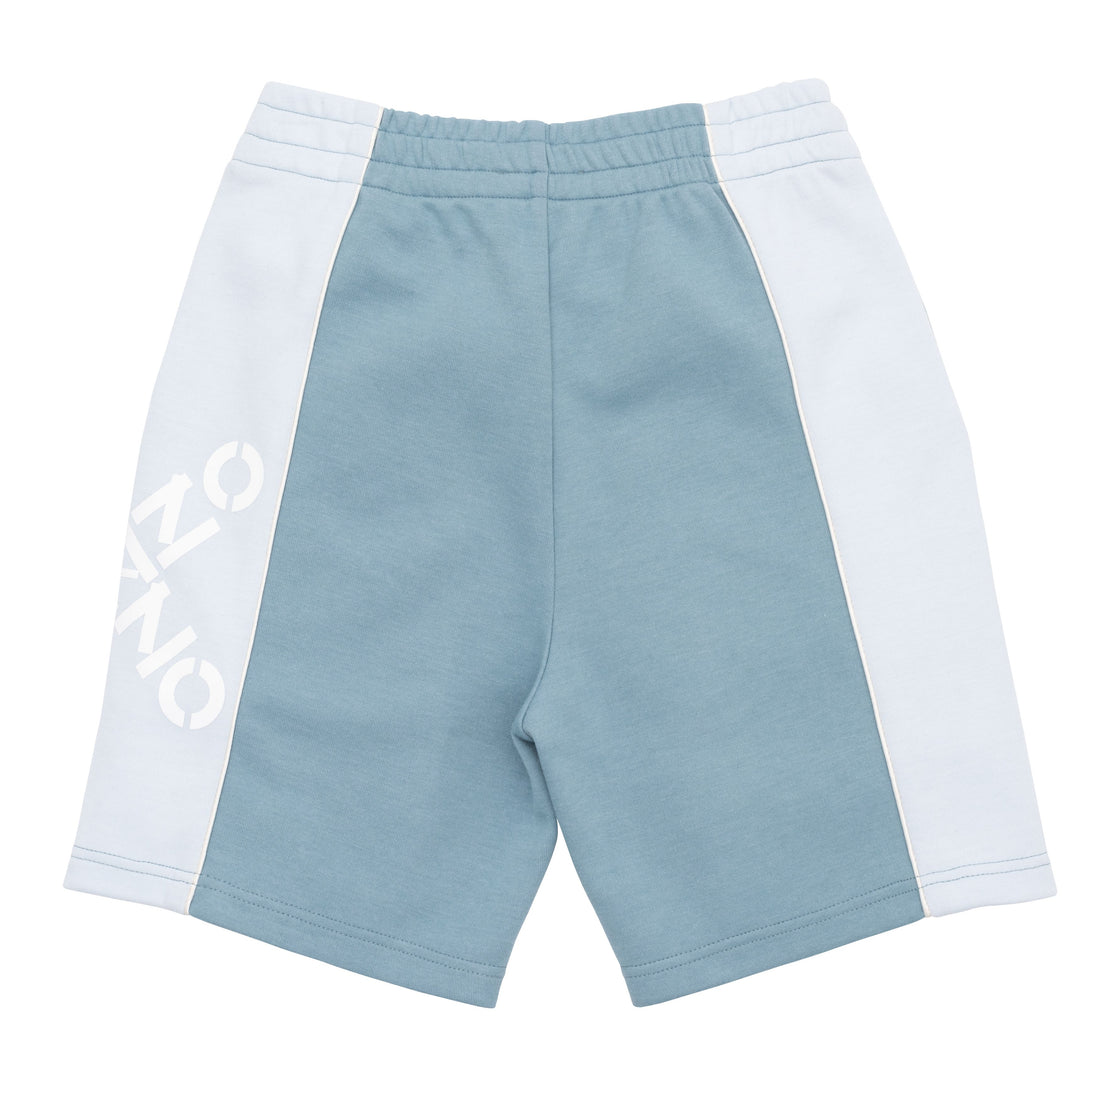 Kenzo Bermuda Shorts Style: K24238